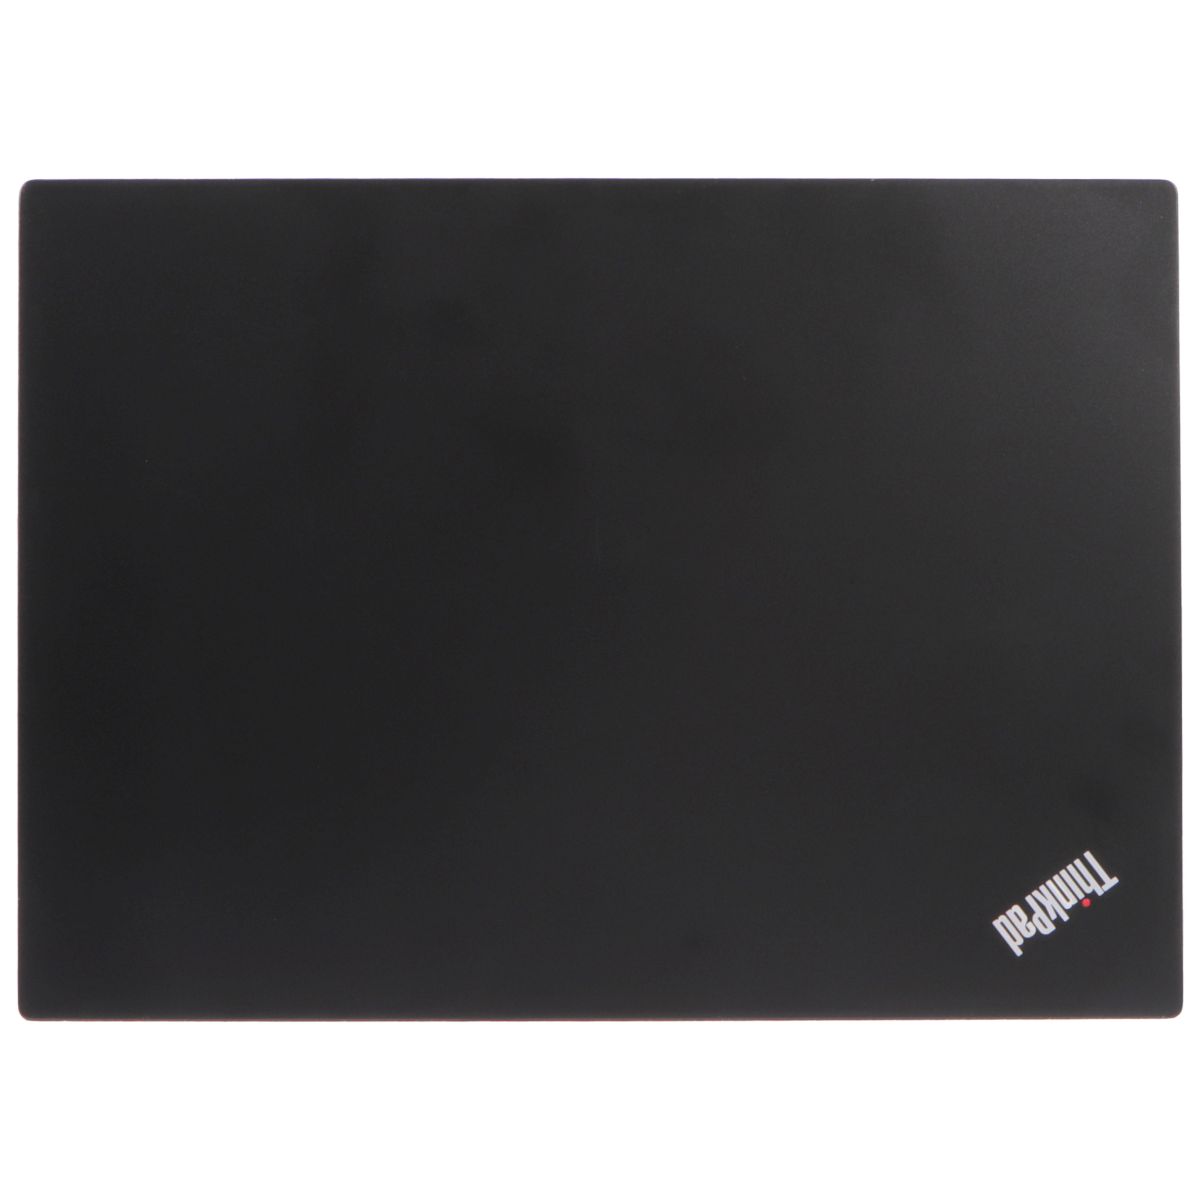 Lenovo ThinkPad E480 (14-in) Laptop (20KN-003YUS) i5-7200U/256GB/16GB/10 Pro Laptops - PC Laptops & Netbooks Lenovo    - Simple Cell Bulk Wholesale Pricing - USA Seller